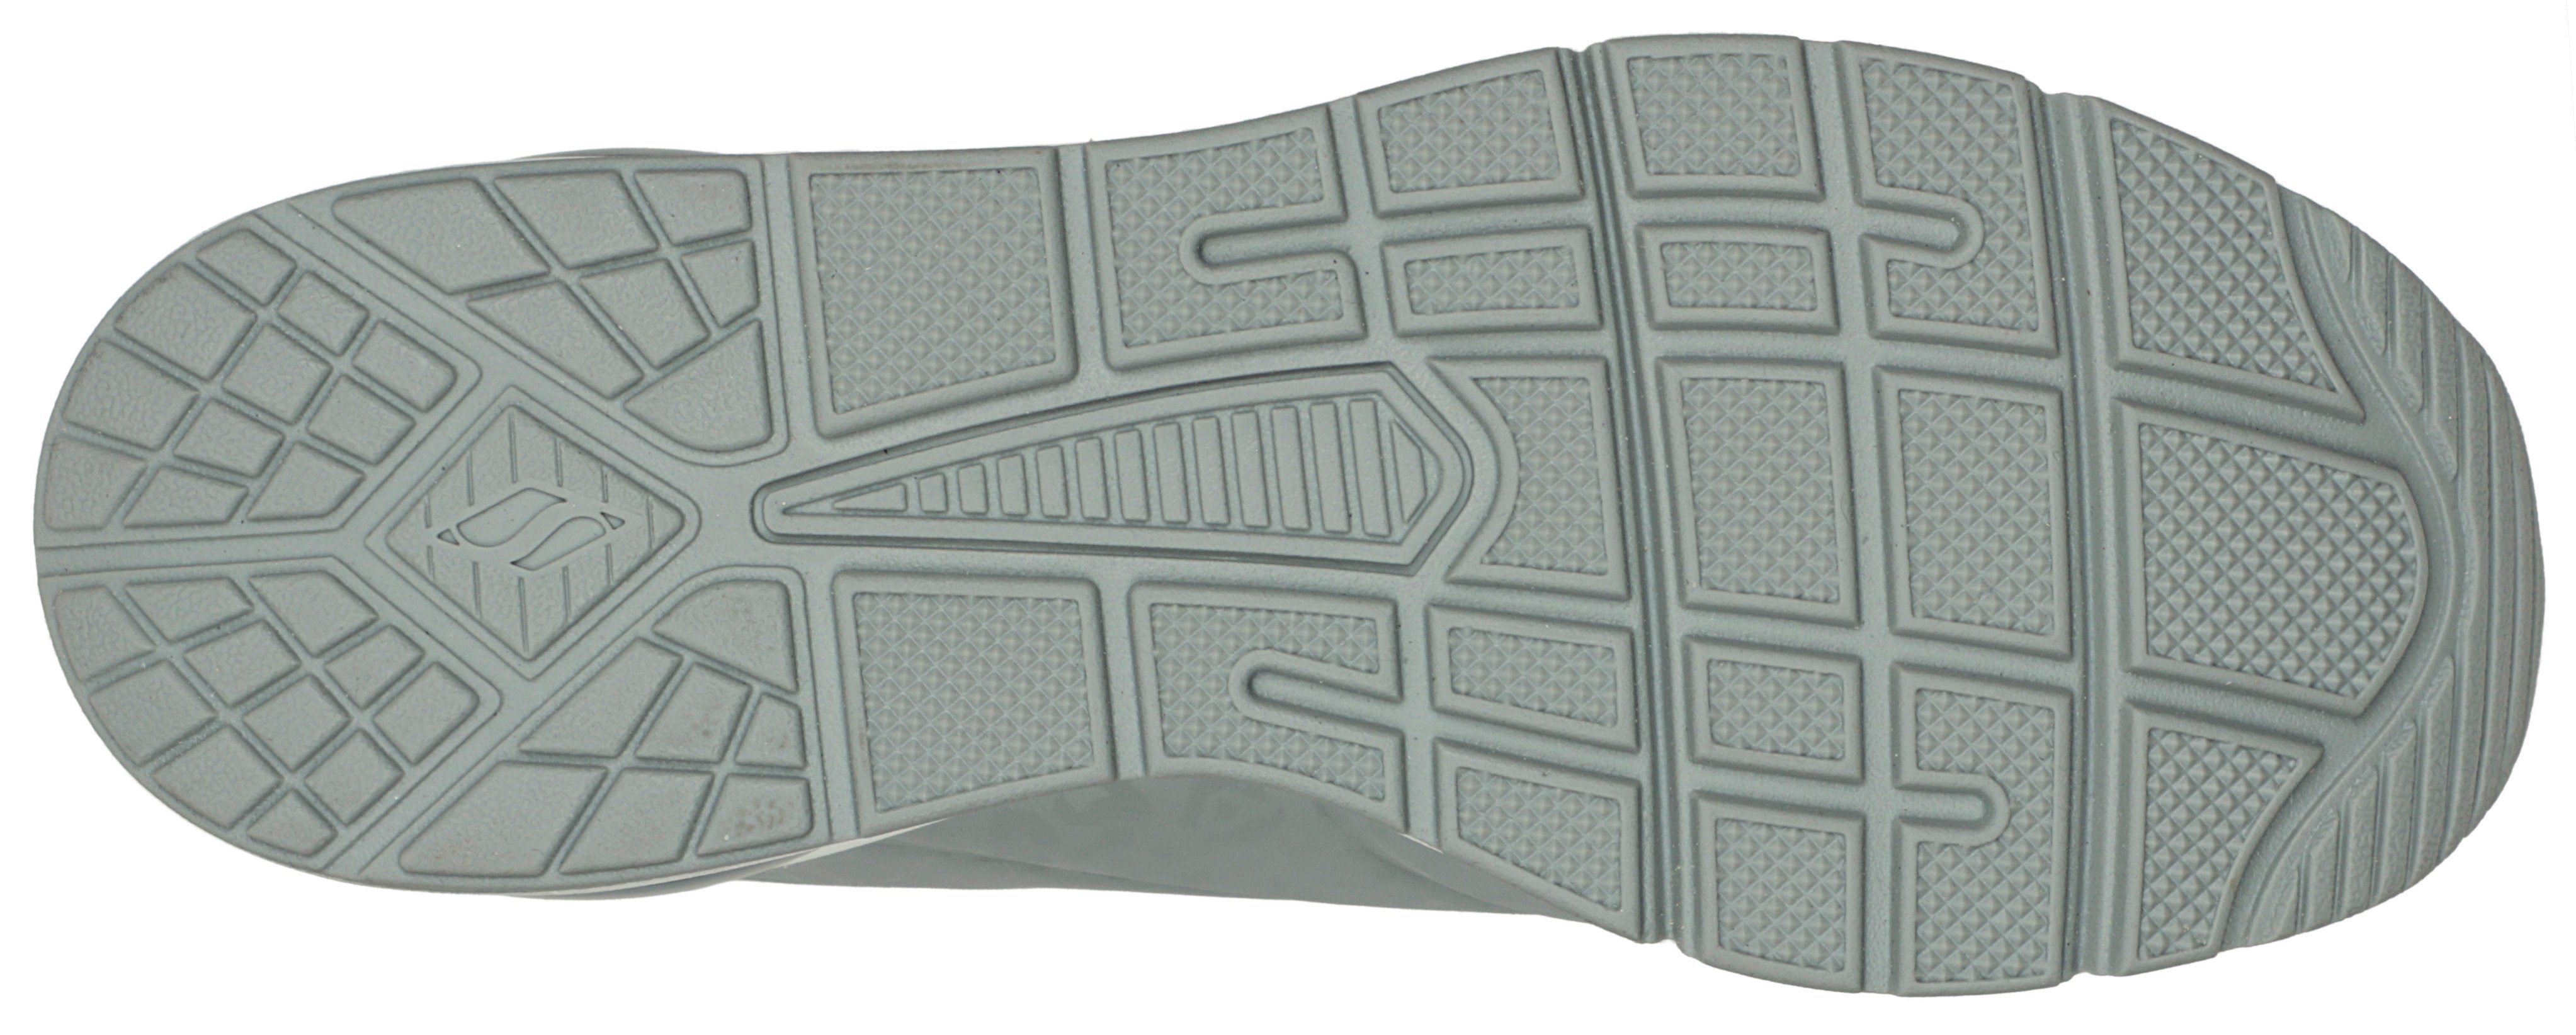 grau IN-KAT-NEATO UNO Skech-Air-Luftkammernsohle Sneaker mit Skechers 2 -